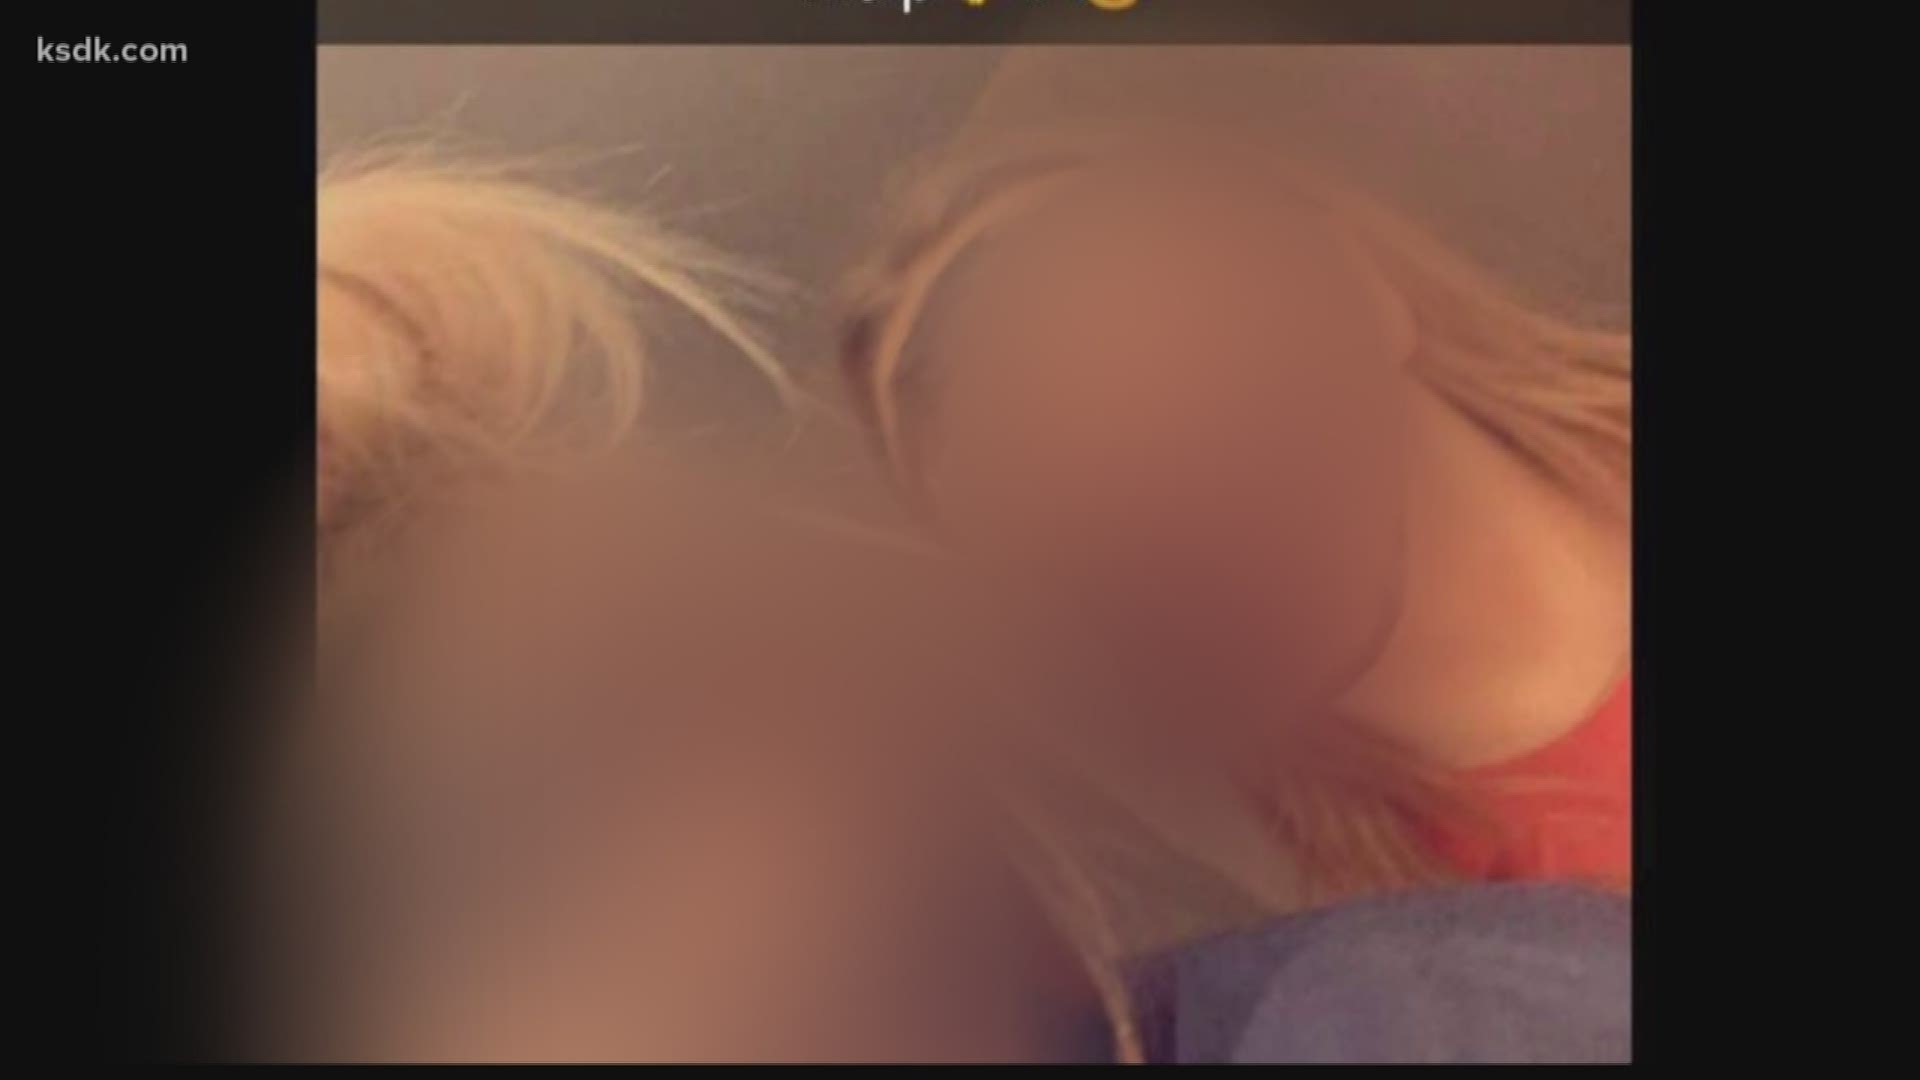 A racist social media post of girls in blackface is circulating at Eureka High School. It shows two girls in blackface using a slur in the caption.